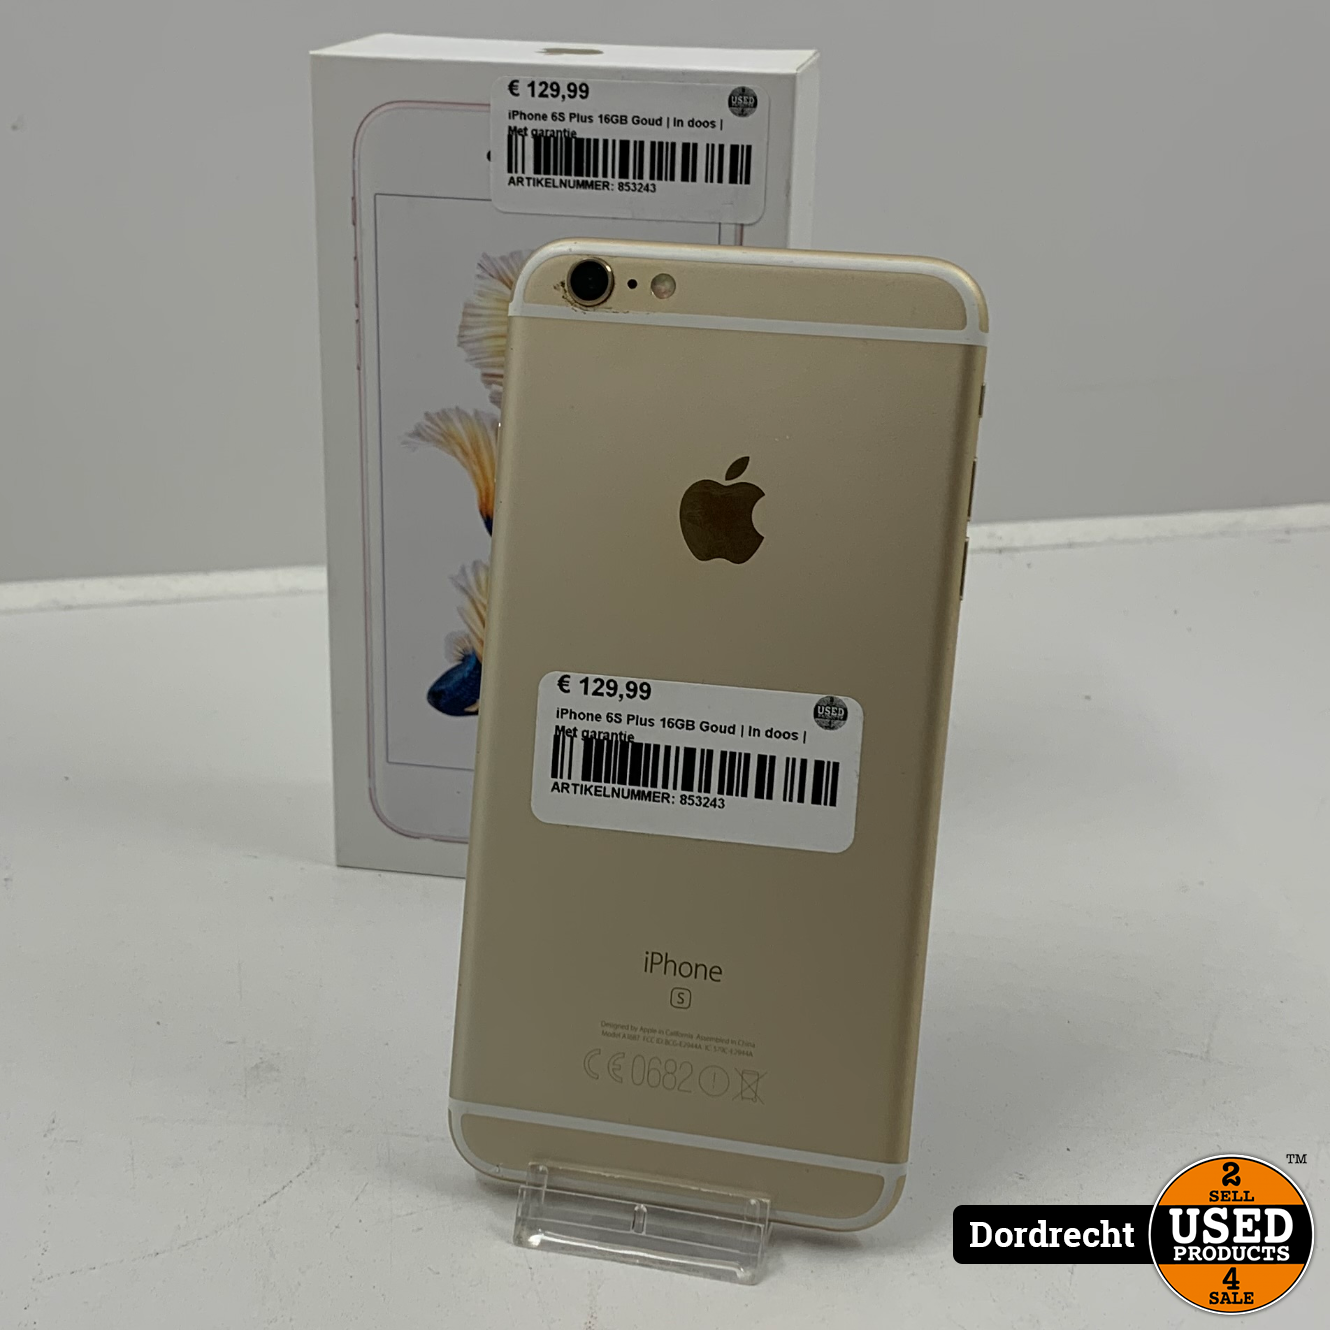 baas buffet plotseling iPhone 6S Plus 16GB Goud | Accu 100% | In doos | Met garantie - Used  Products Dordrecht